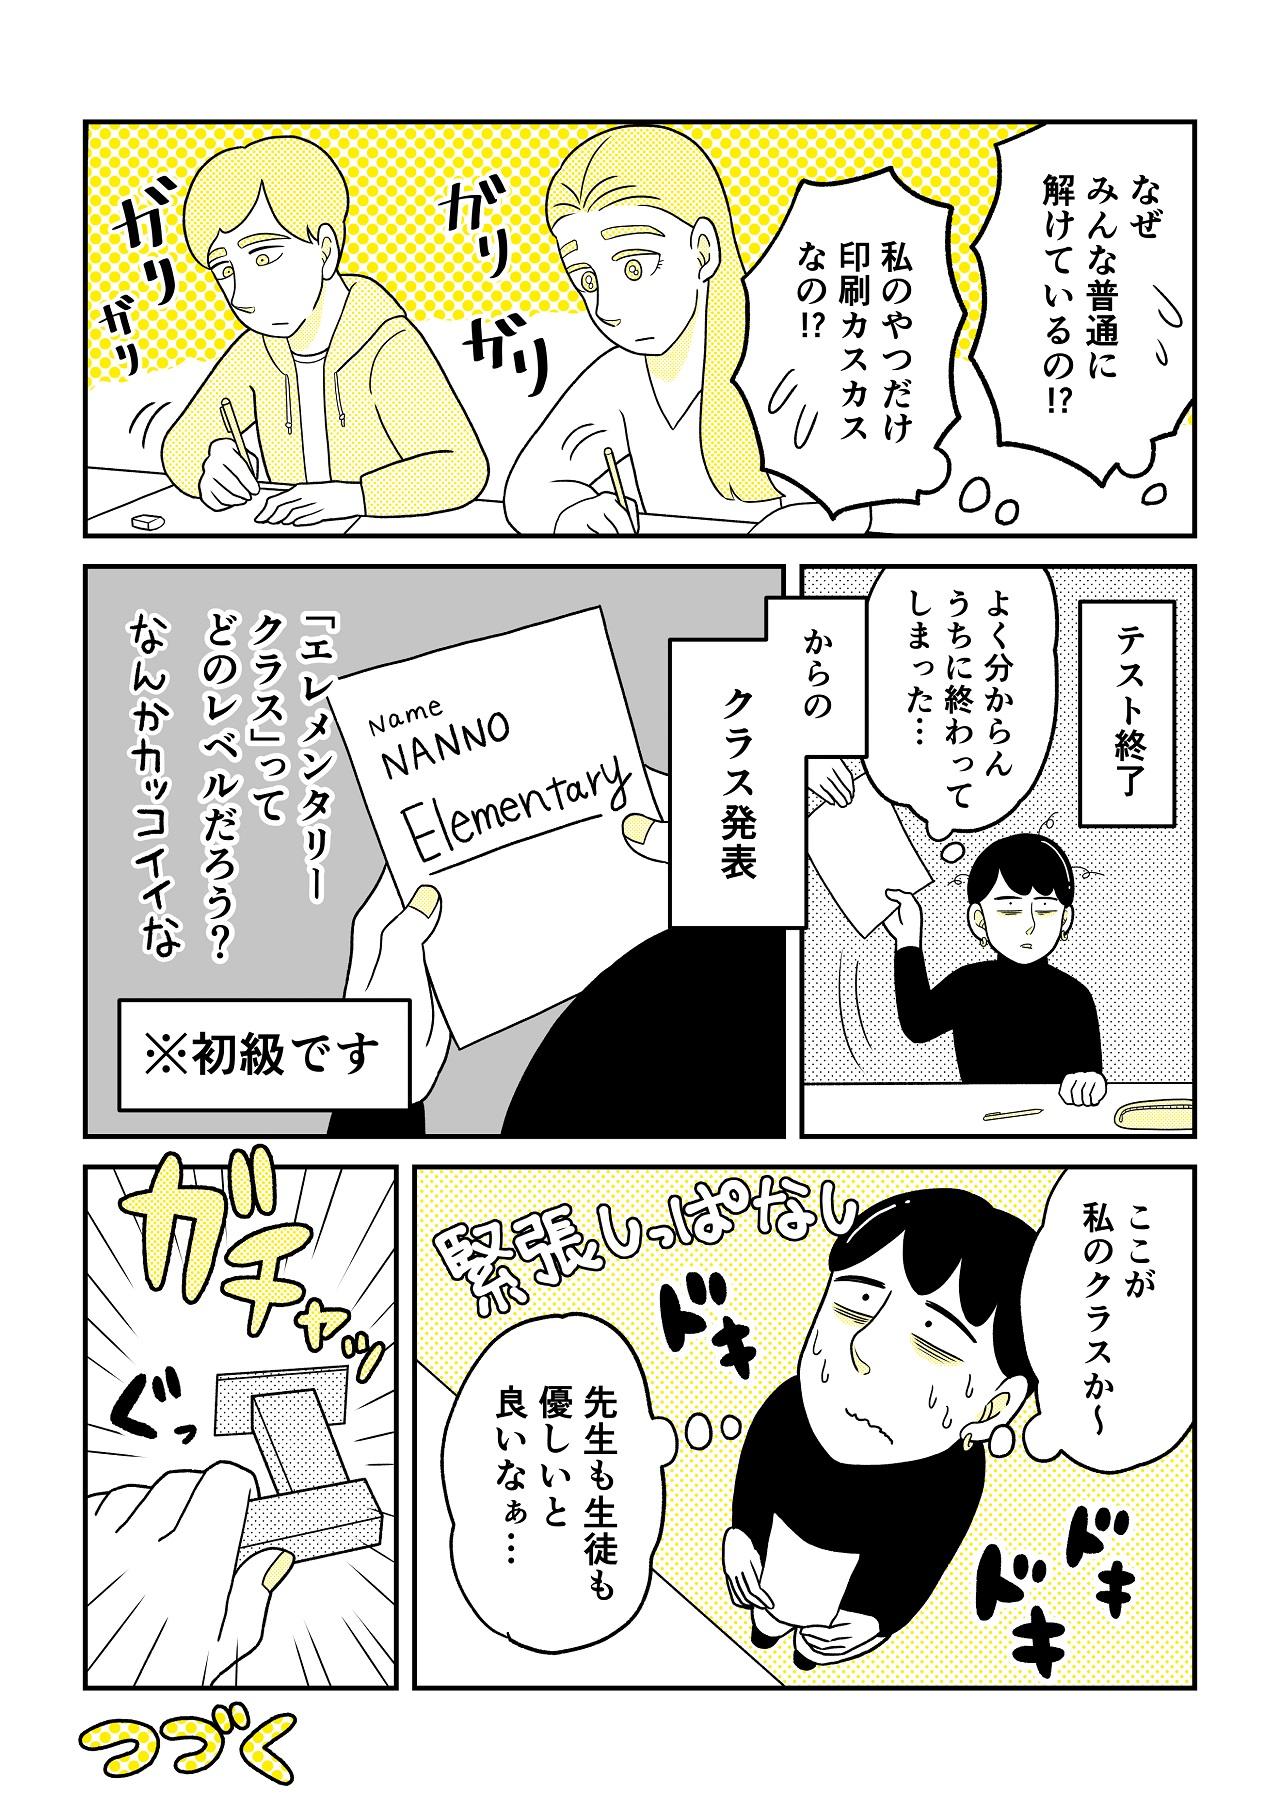 https://www.ryugaku.co.jp/column/images/06_06_1280.jpg